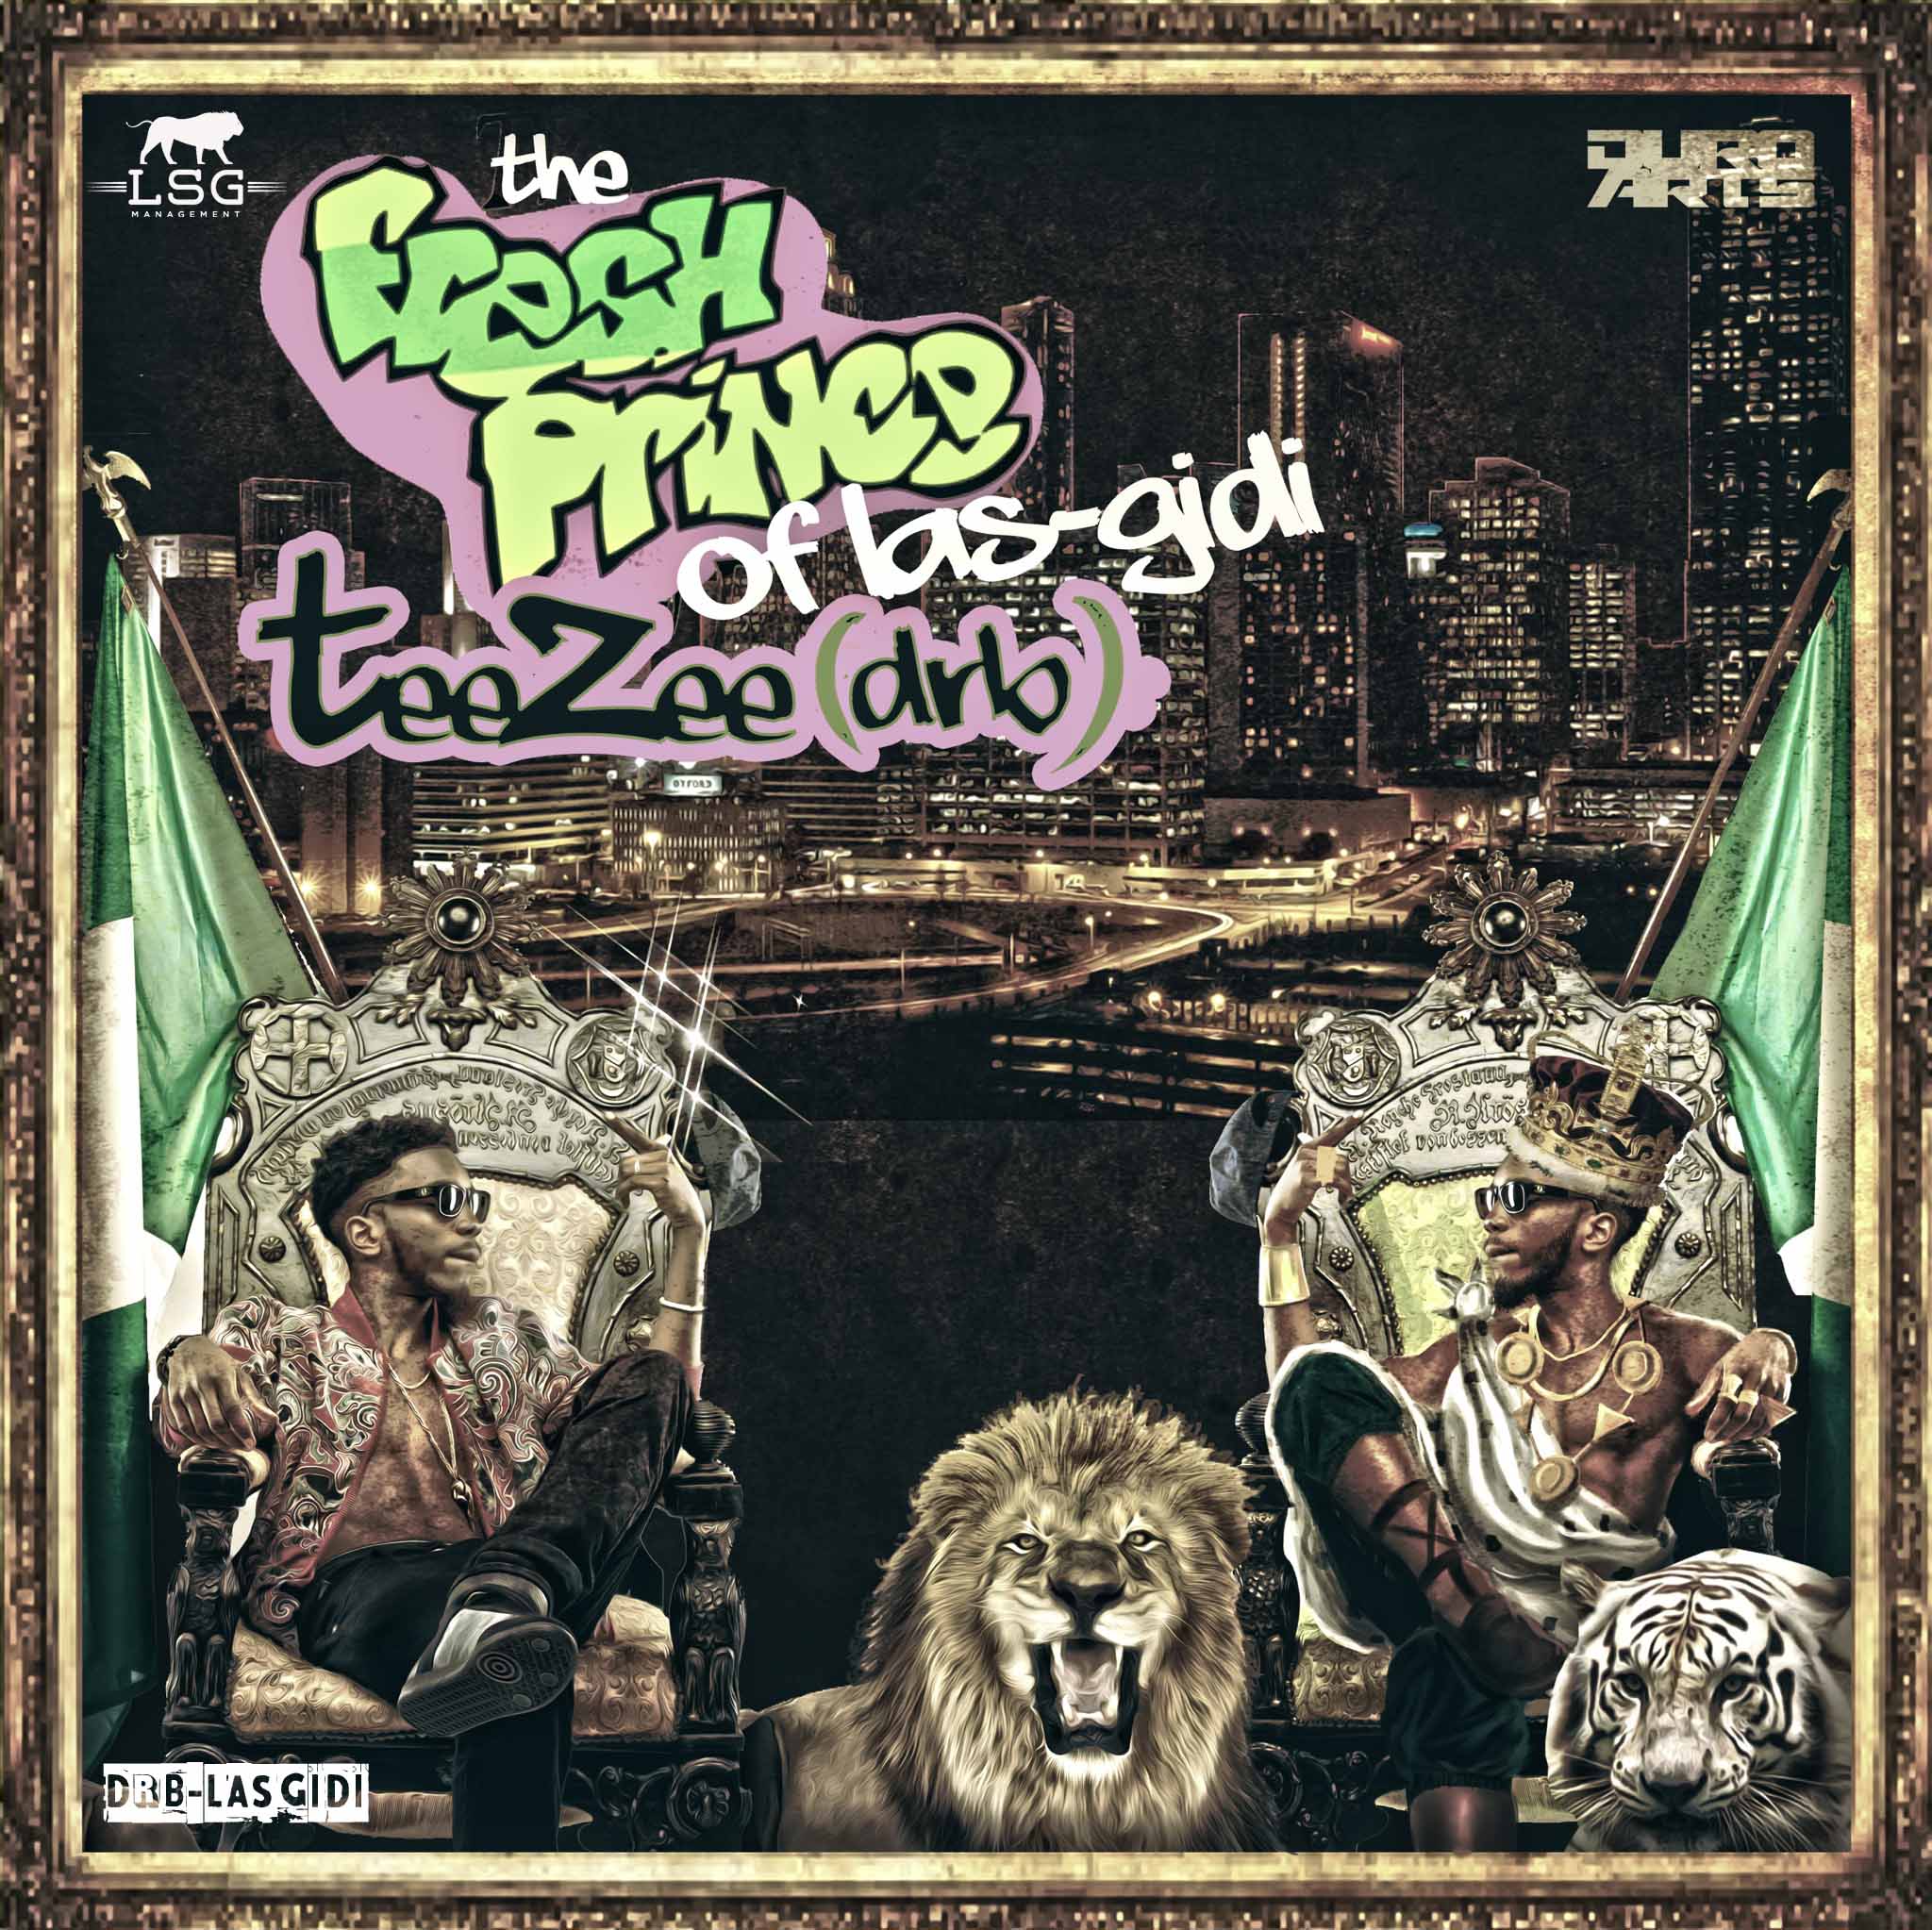 TeeZee Fresh Prince of LasGidi Mixtape